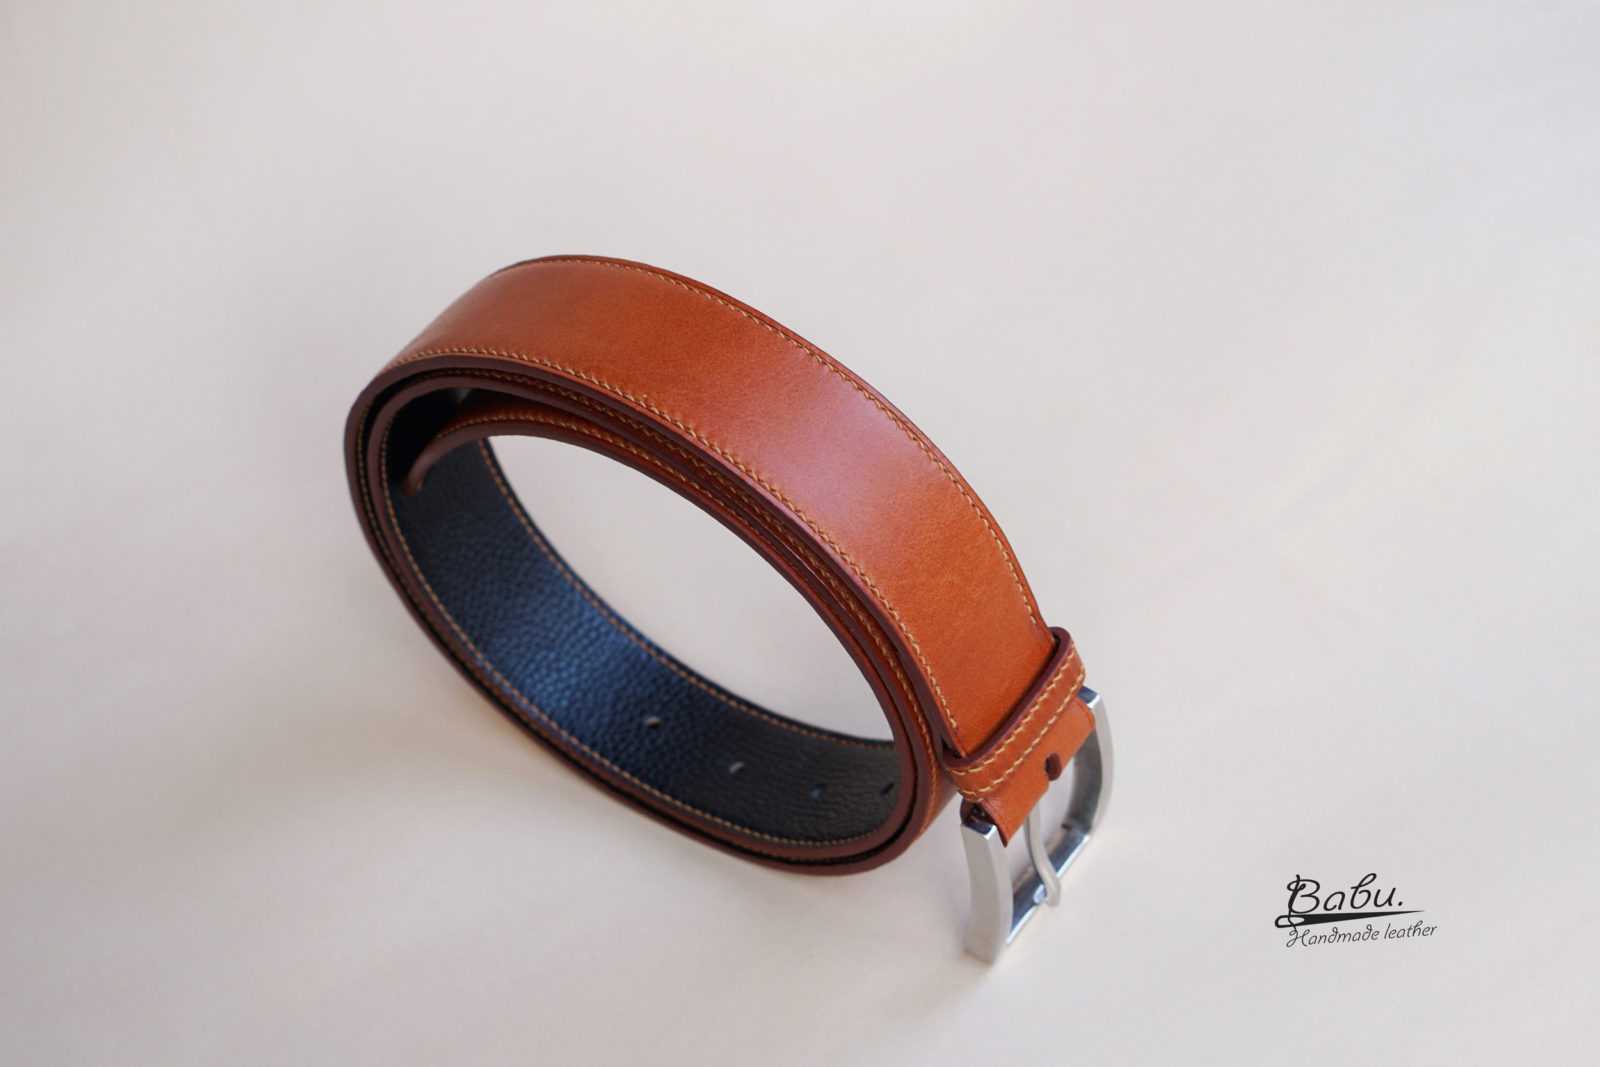 CLASSIC VACHETTA 1.5 Leather Belt